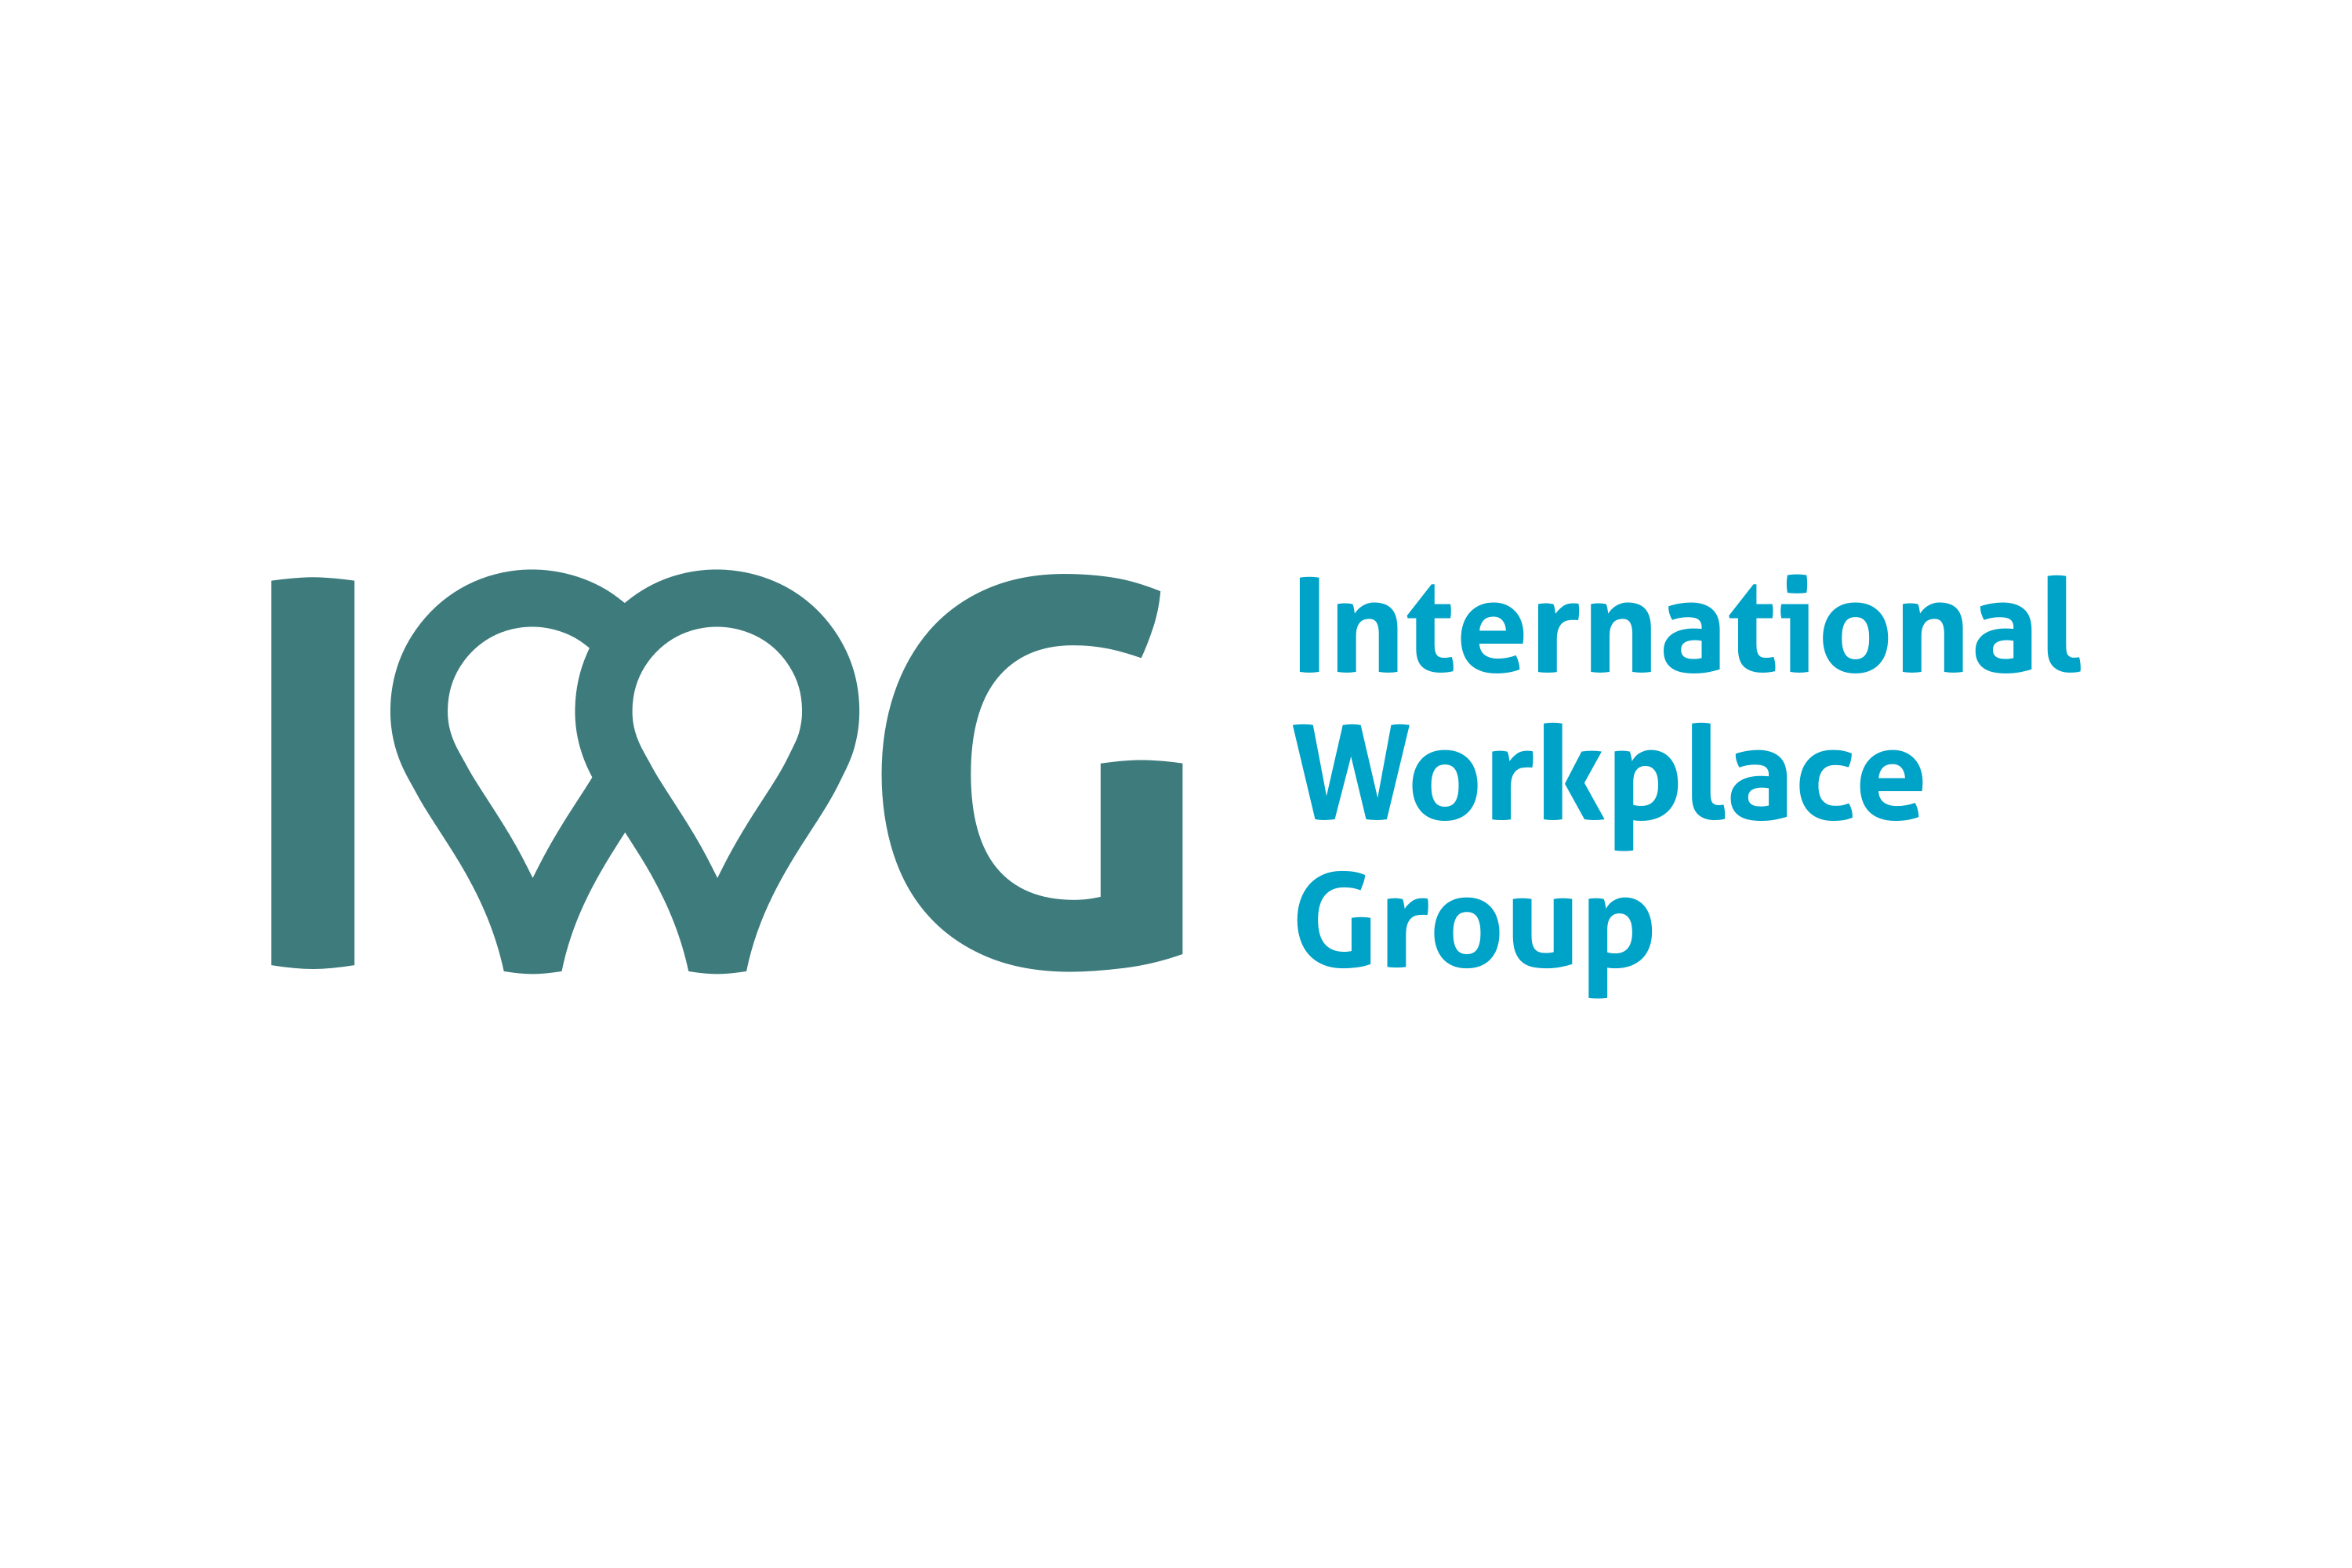 IWG plc Logo